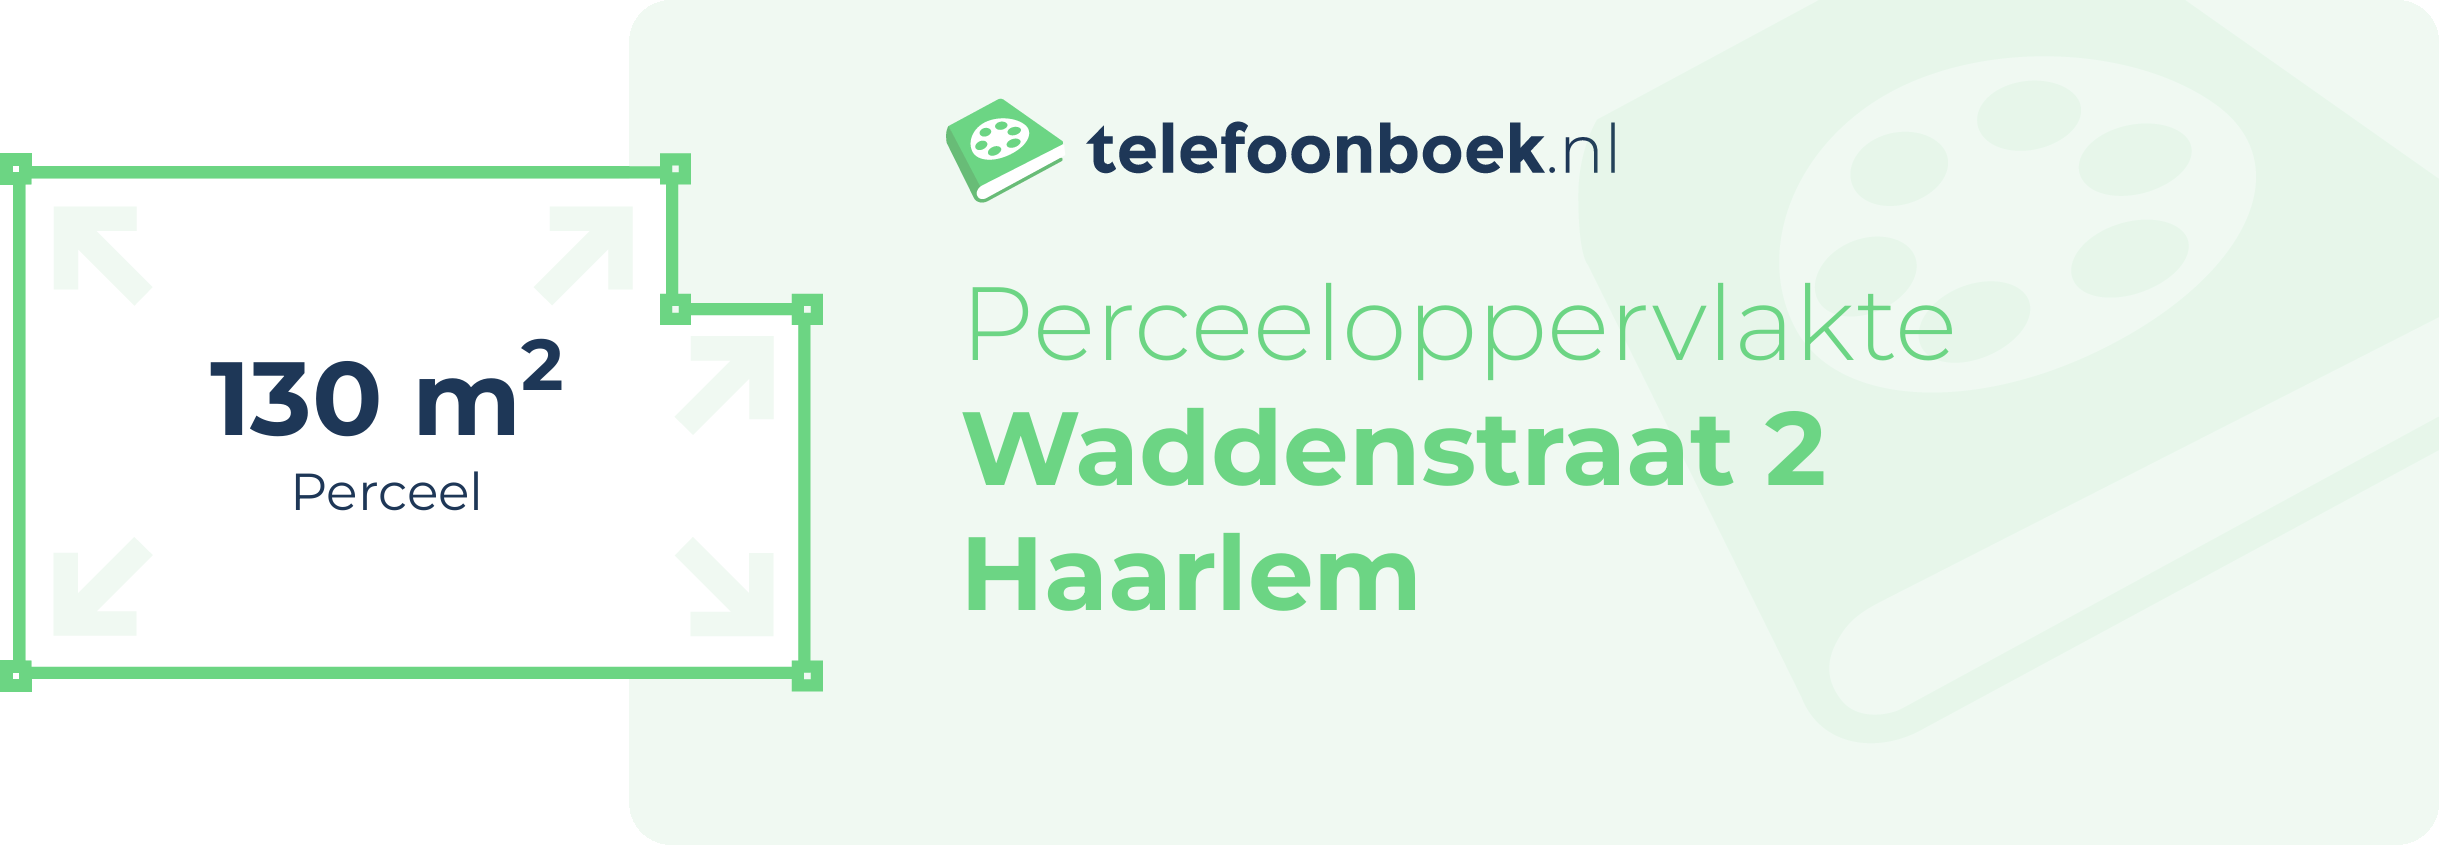 Perceeloppervlakte Waddenstraat 2 Haarlem